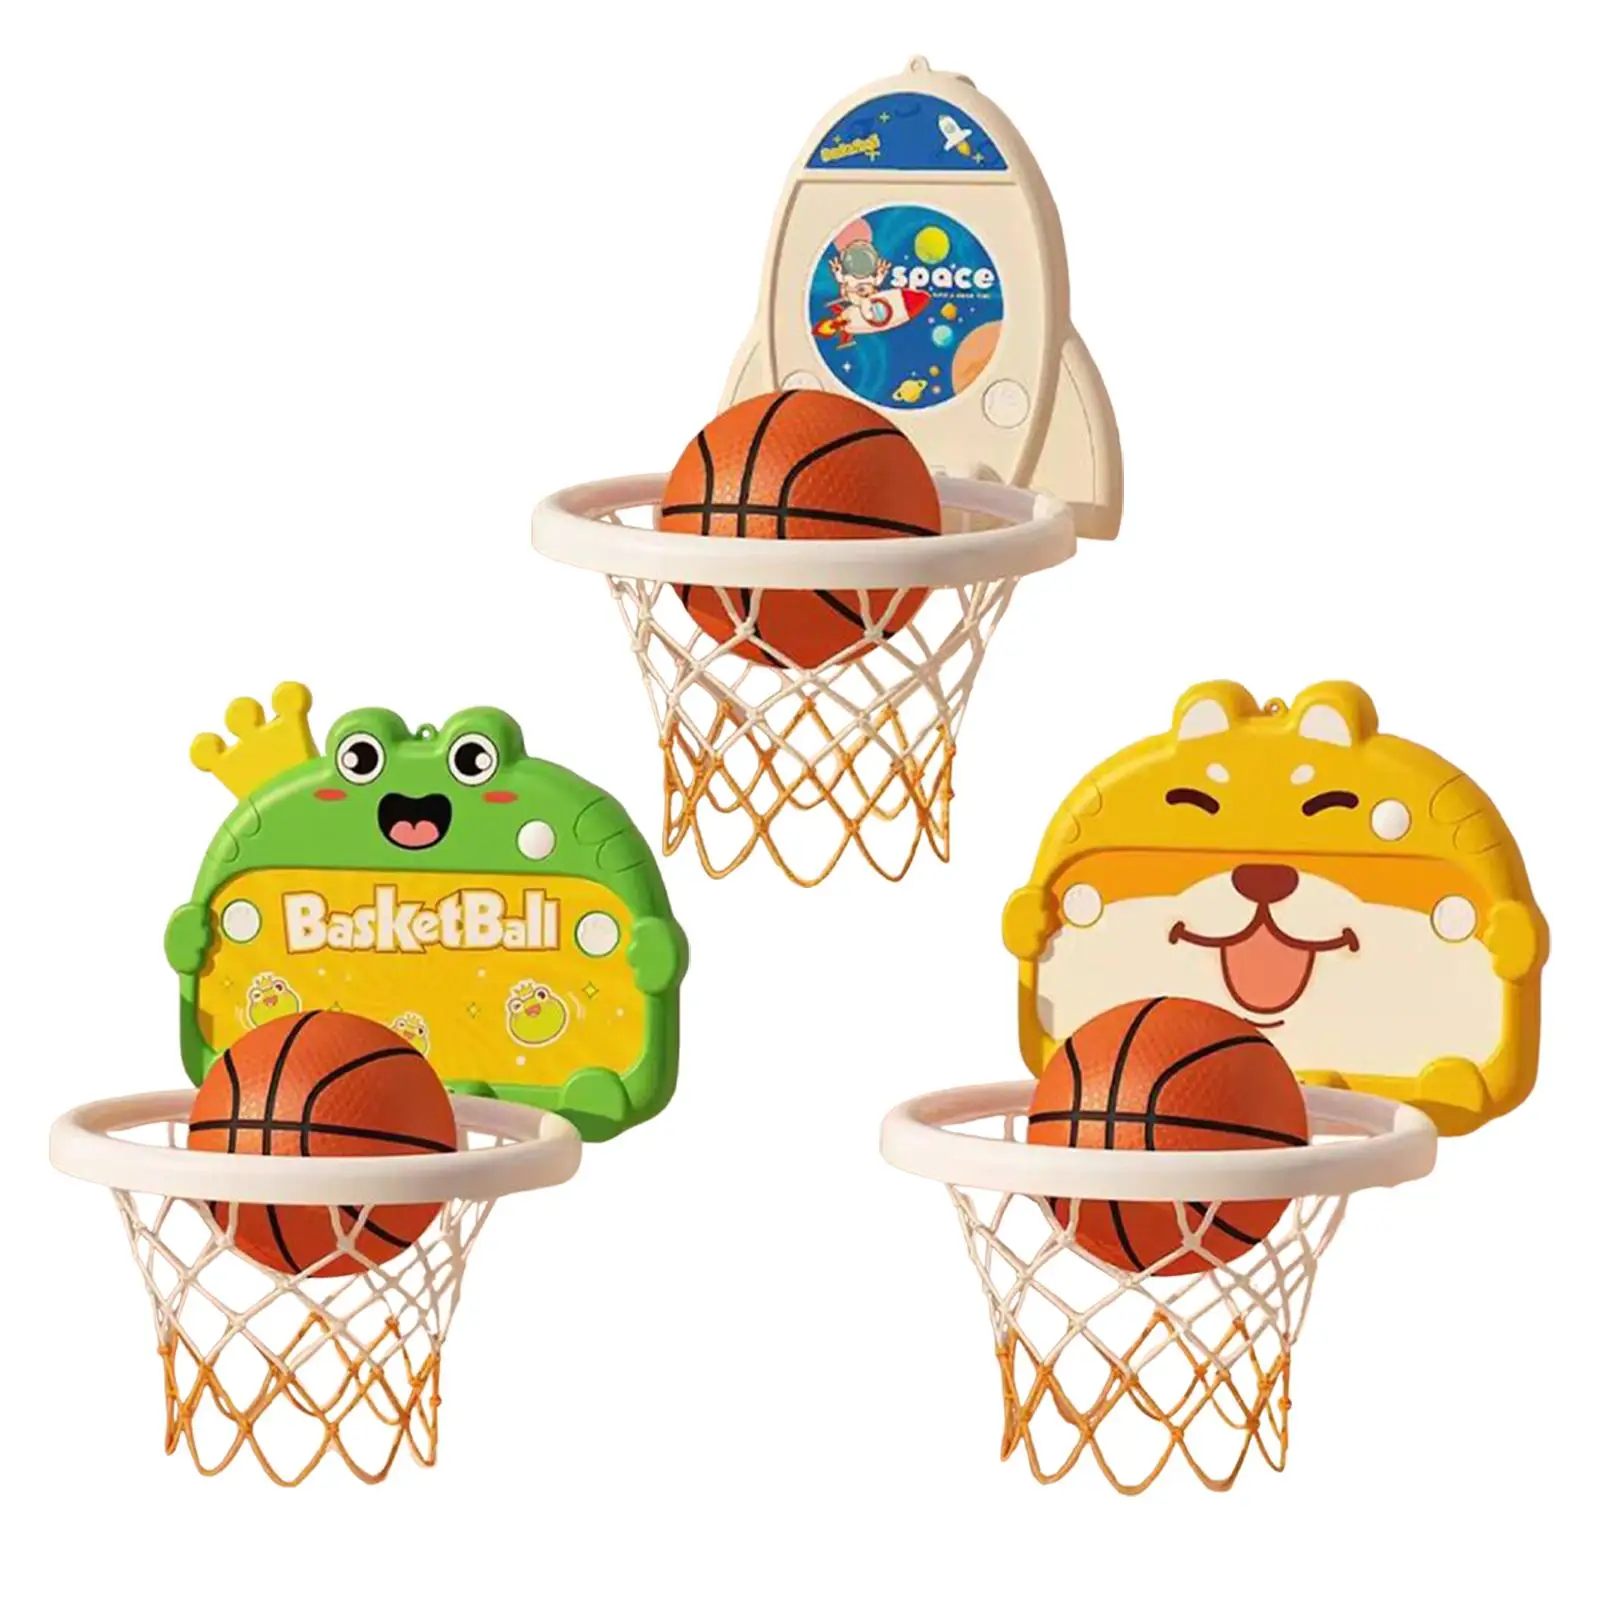 Mini Basketball Hoop Set Wall Mounted Basketball Board, Educational Activity Centers Basketball Toys for Bedroom Holiday